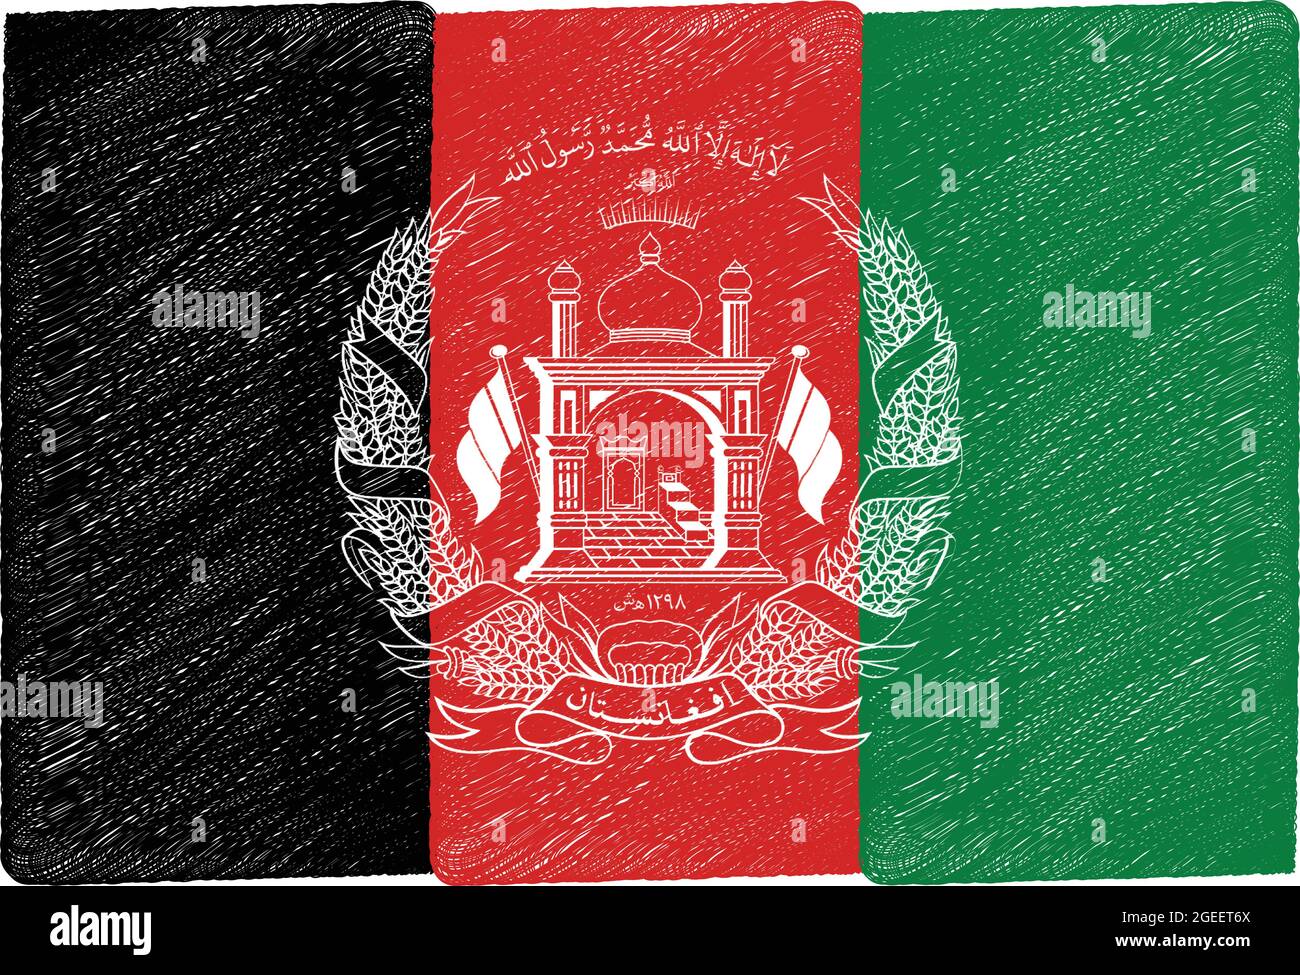 Nationalflagge Afghanistans Malerei Originalfarben Vektor-Illustration, Islamische Republik Afghanistan Flagge nationales Emblem Wappen Stock Vektor